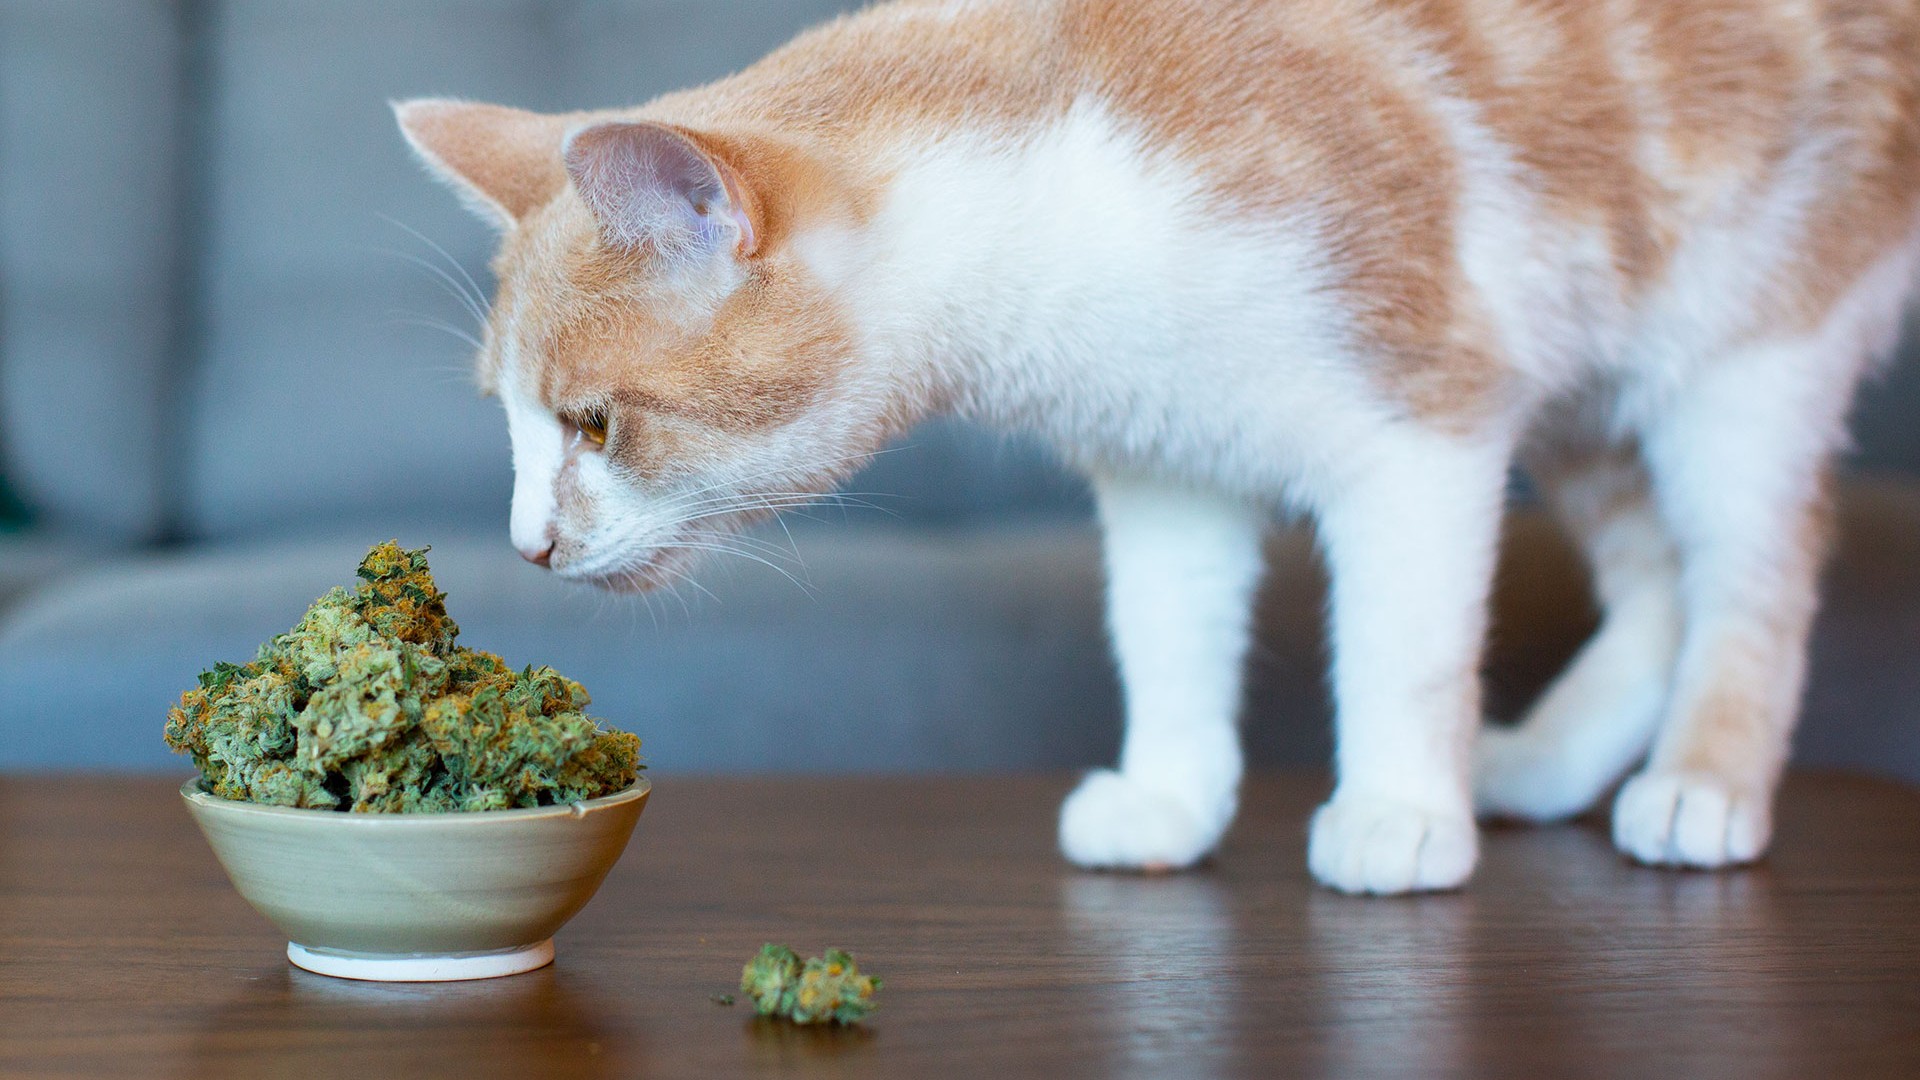 Cat Marijuana - Can a Cat Get High?